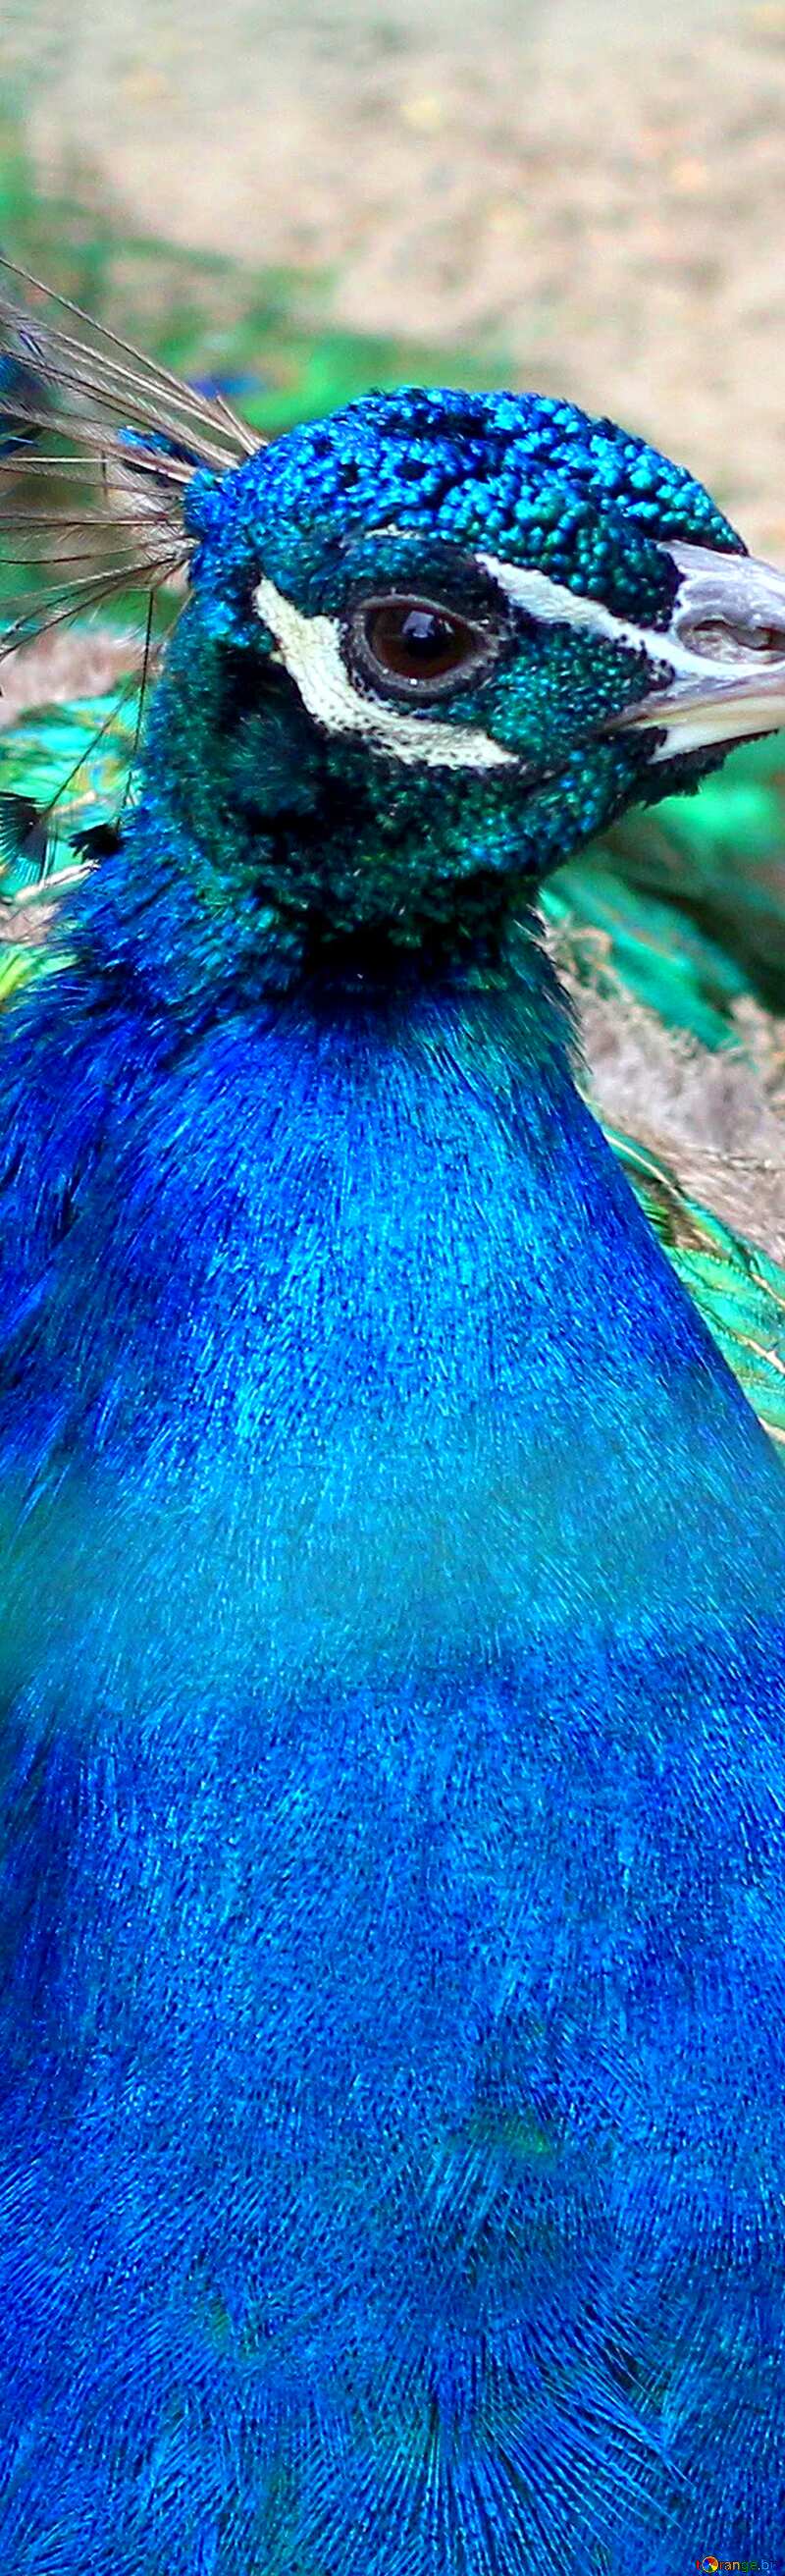 Bird peacock vertical background №46022